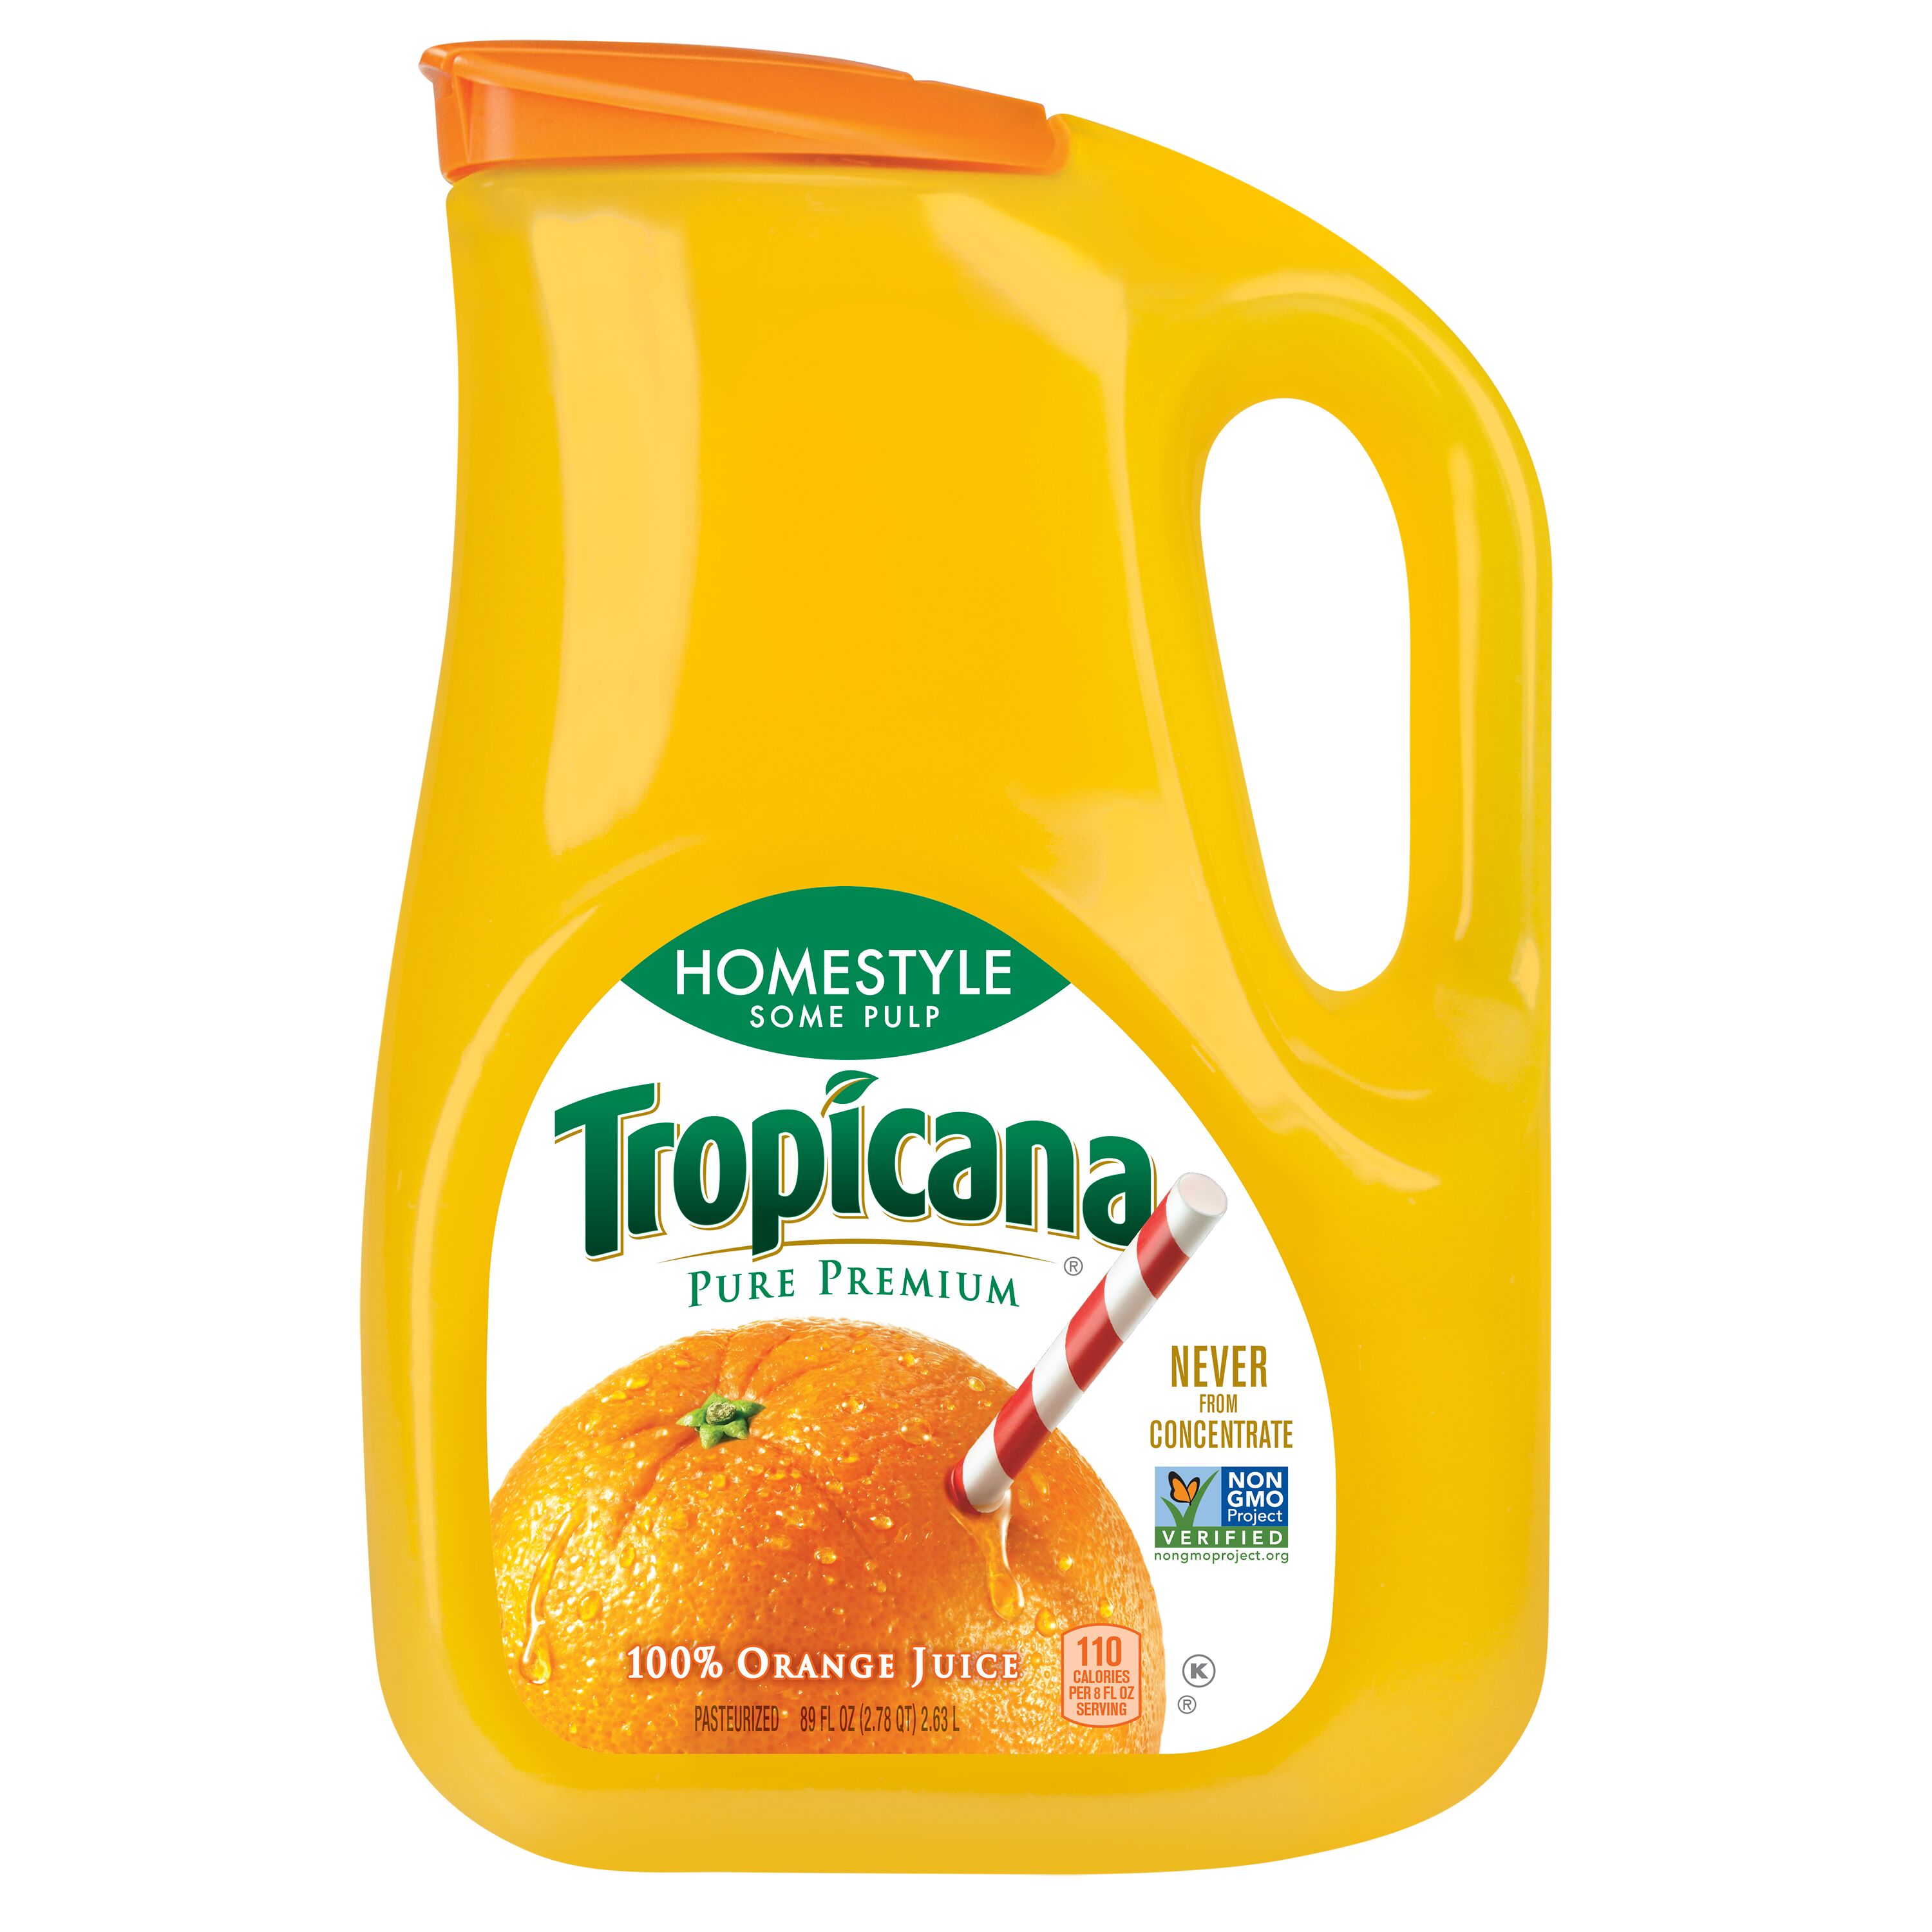 Tropicana Pure Premium, Homestyle Some Pulp 100% Orange Juice Drink, 89 fl oz Jug - image 1 of 8